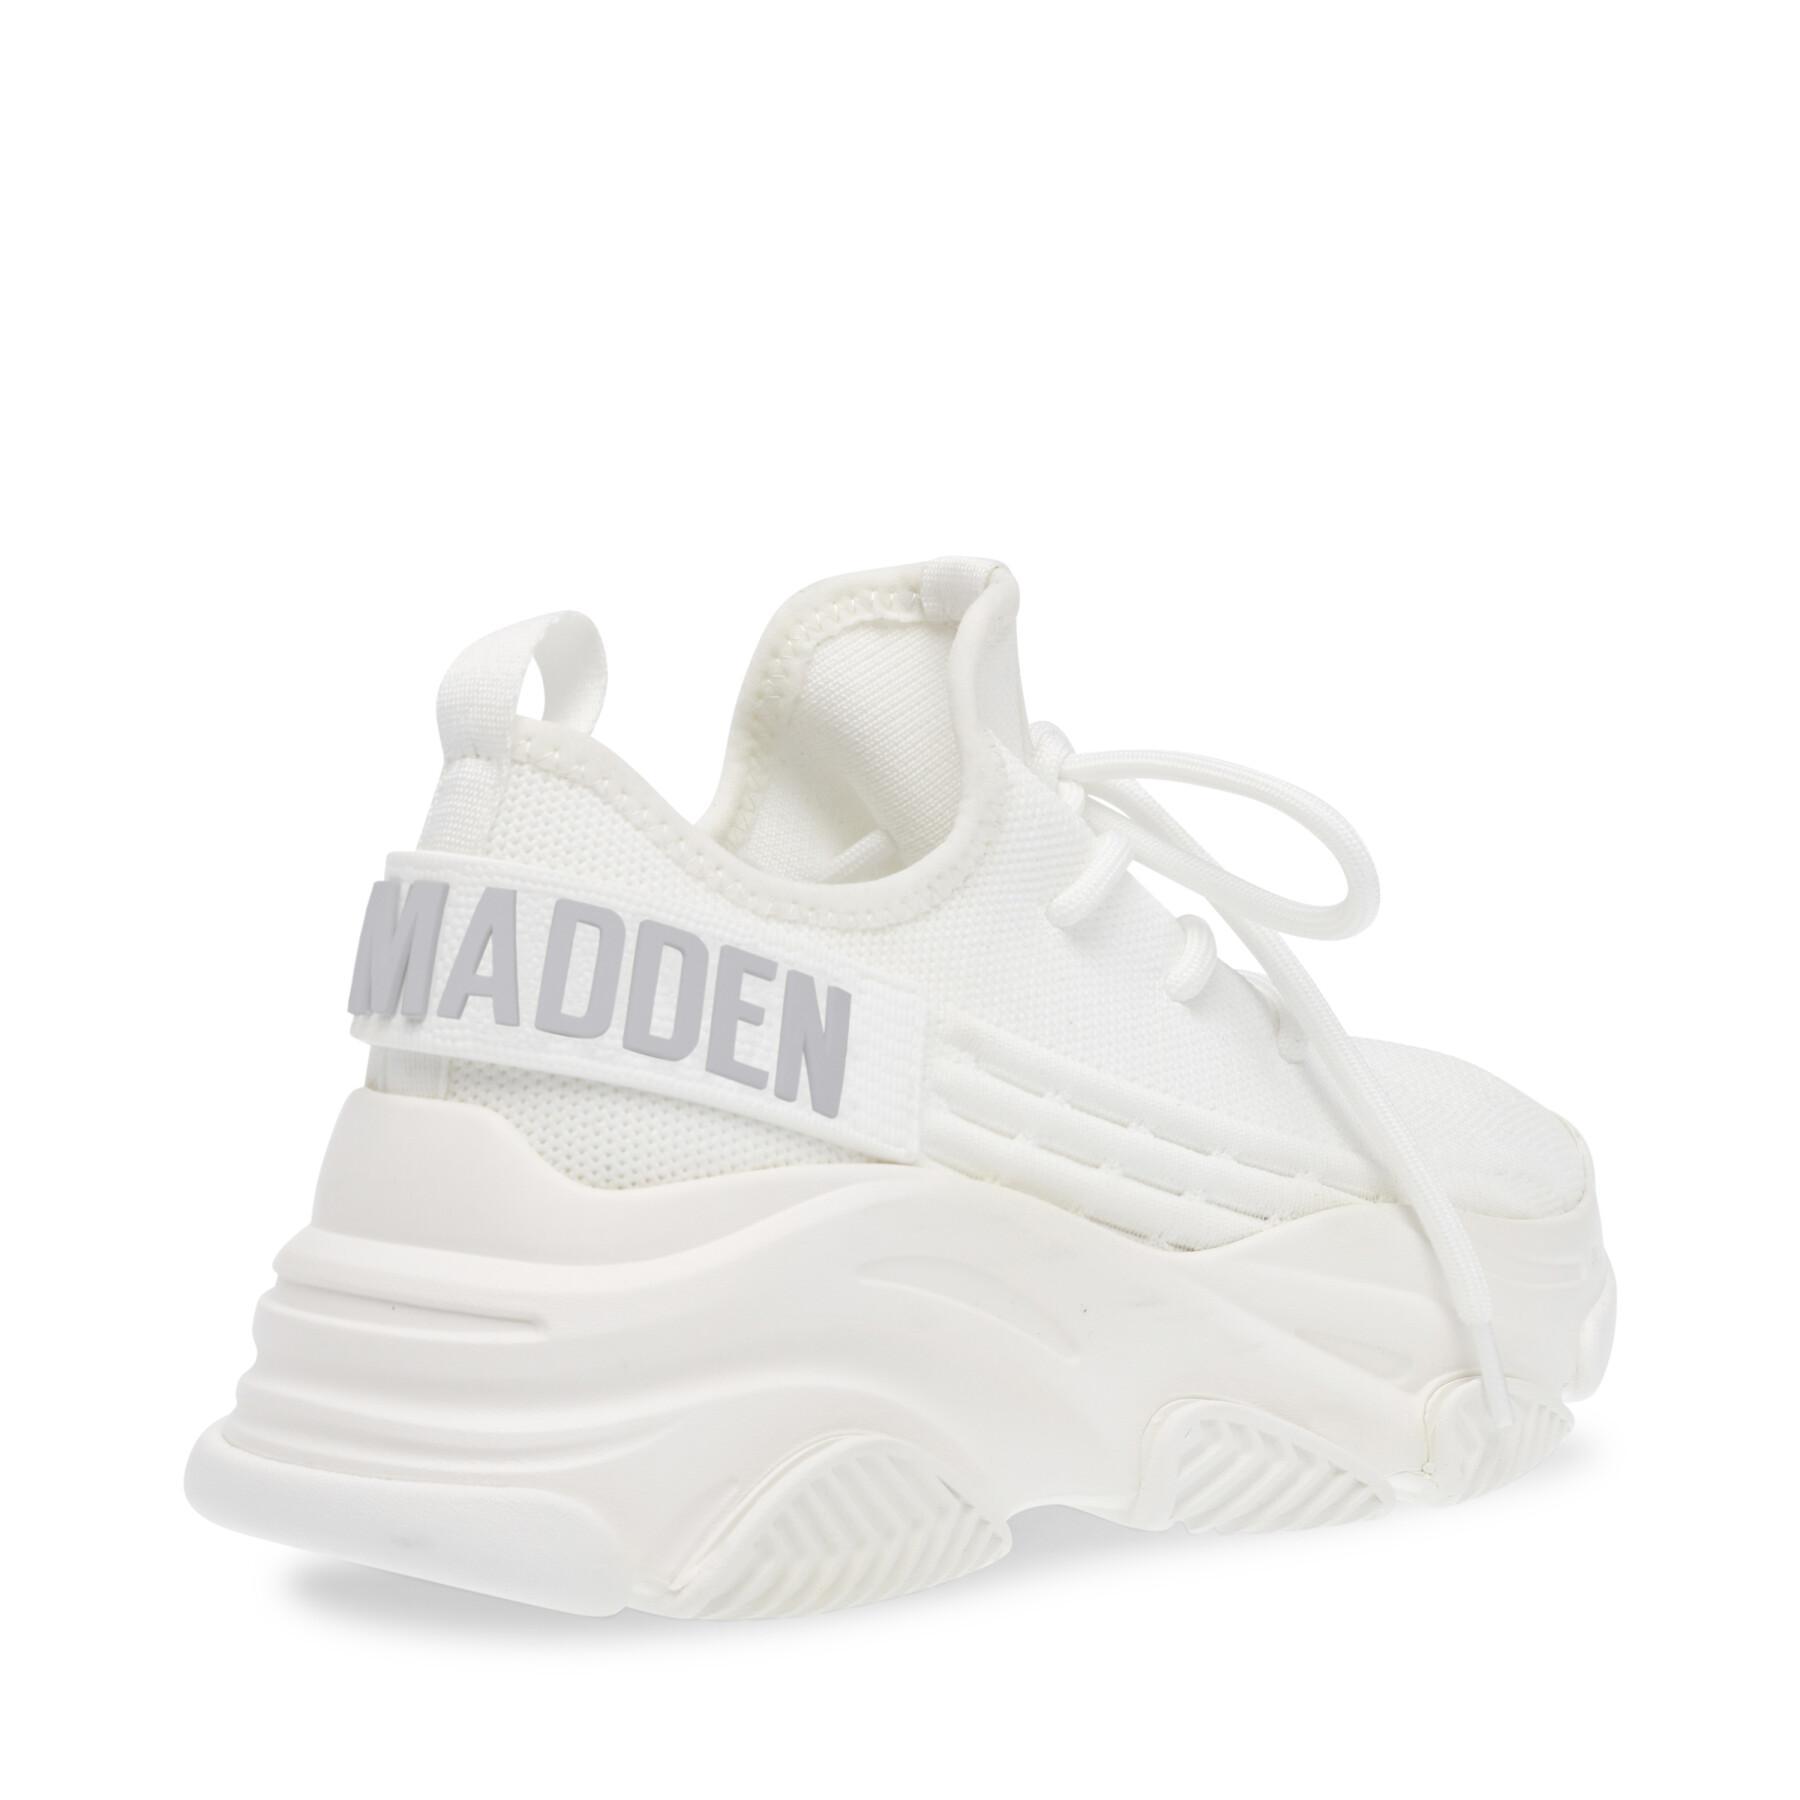 Protected women's sneakers Steve Madden